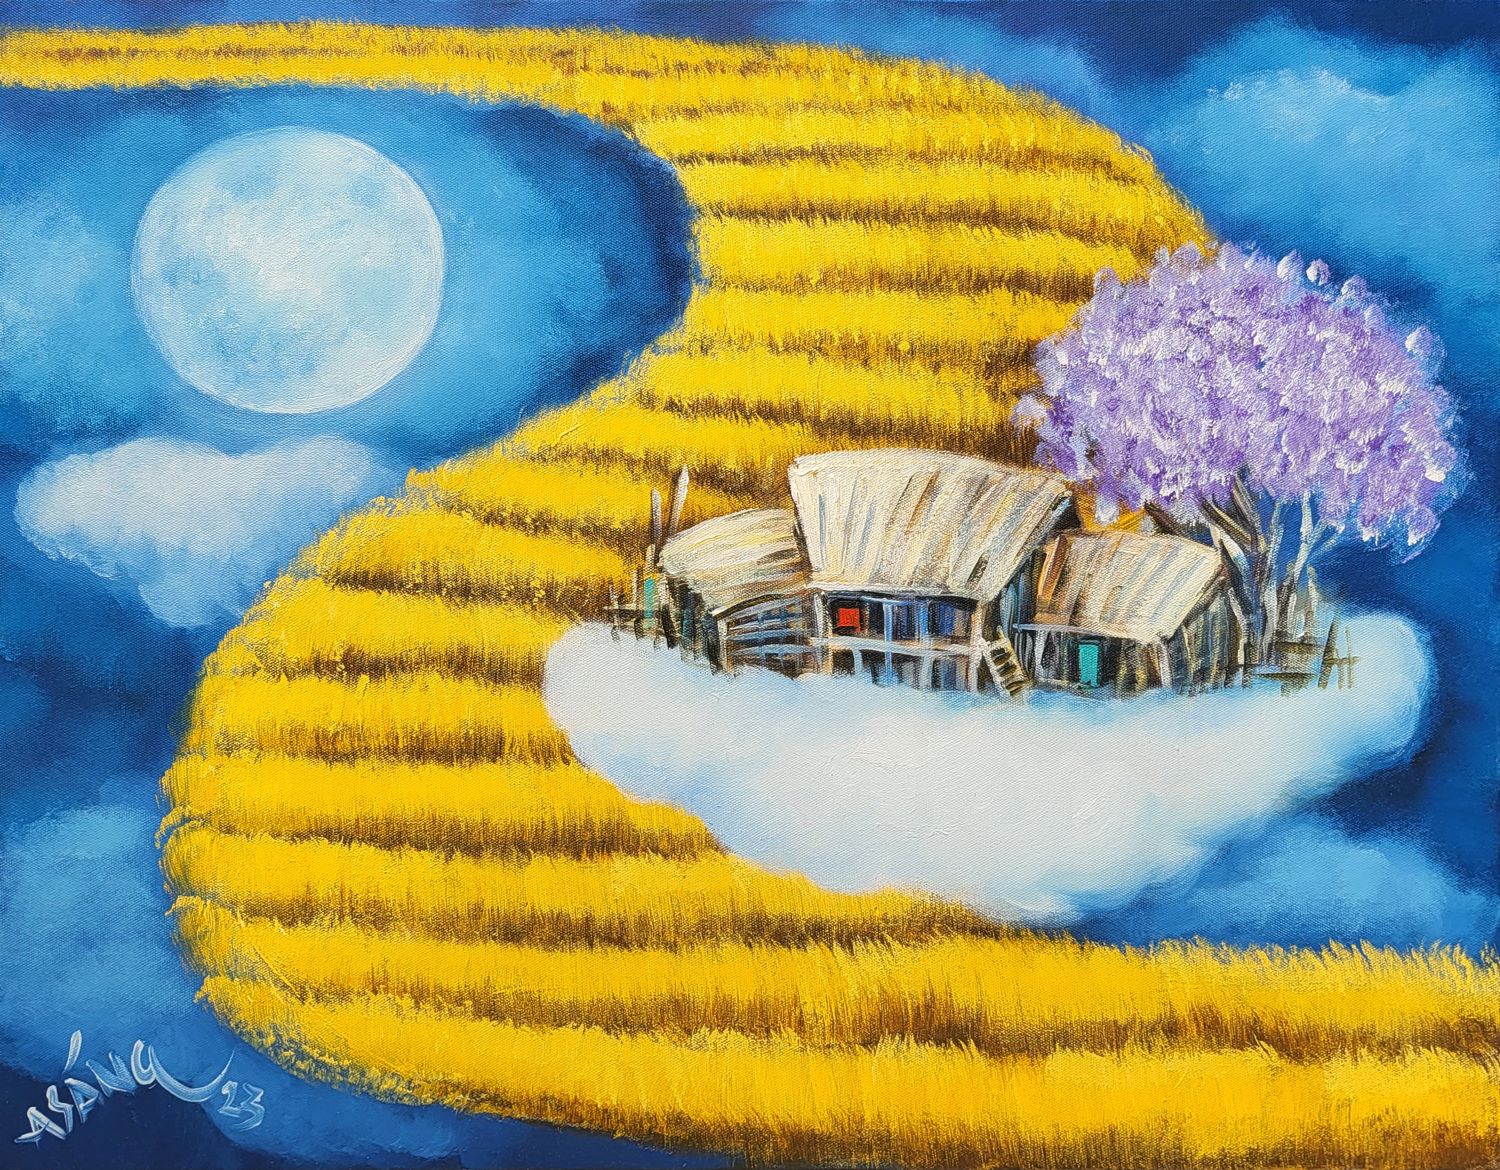 Abundant Season - Vietnamese Oil Painting by Artist Hoang A Sang